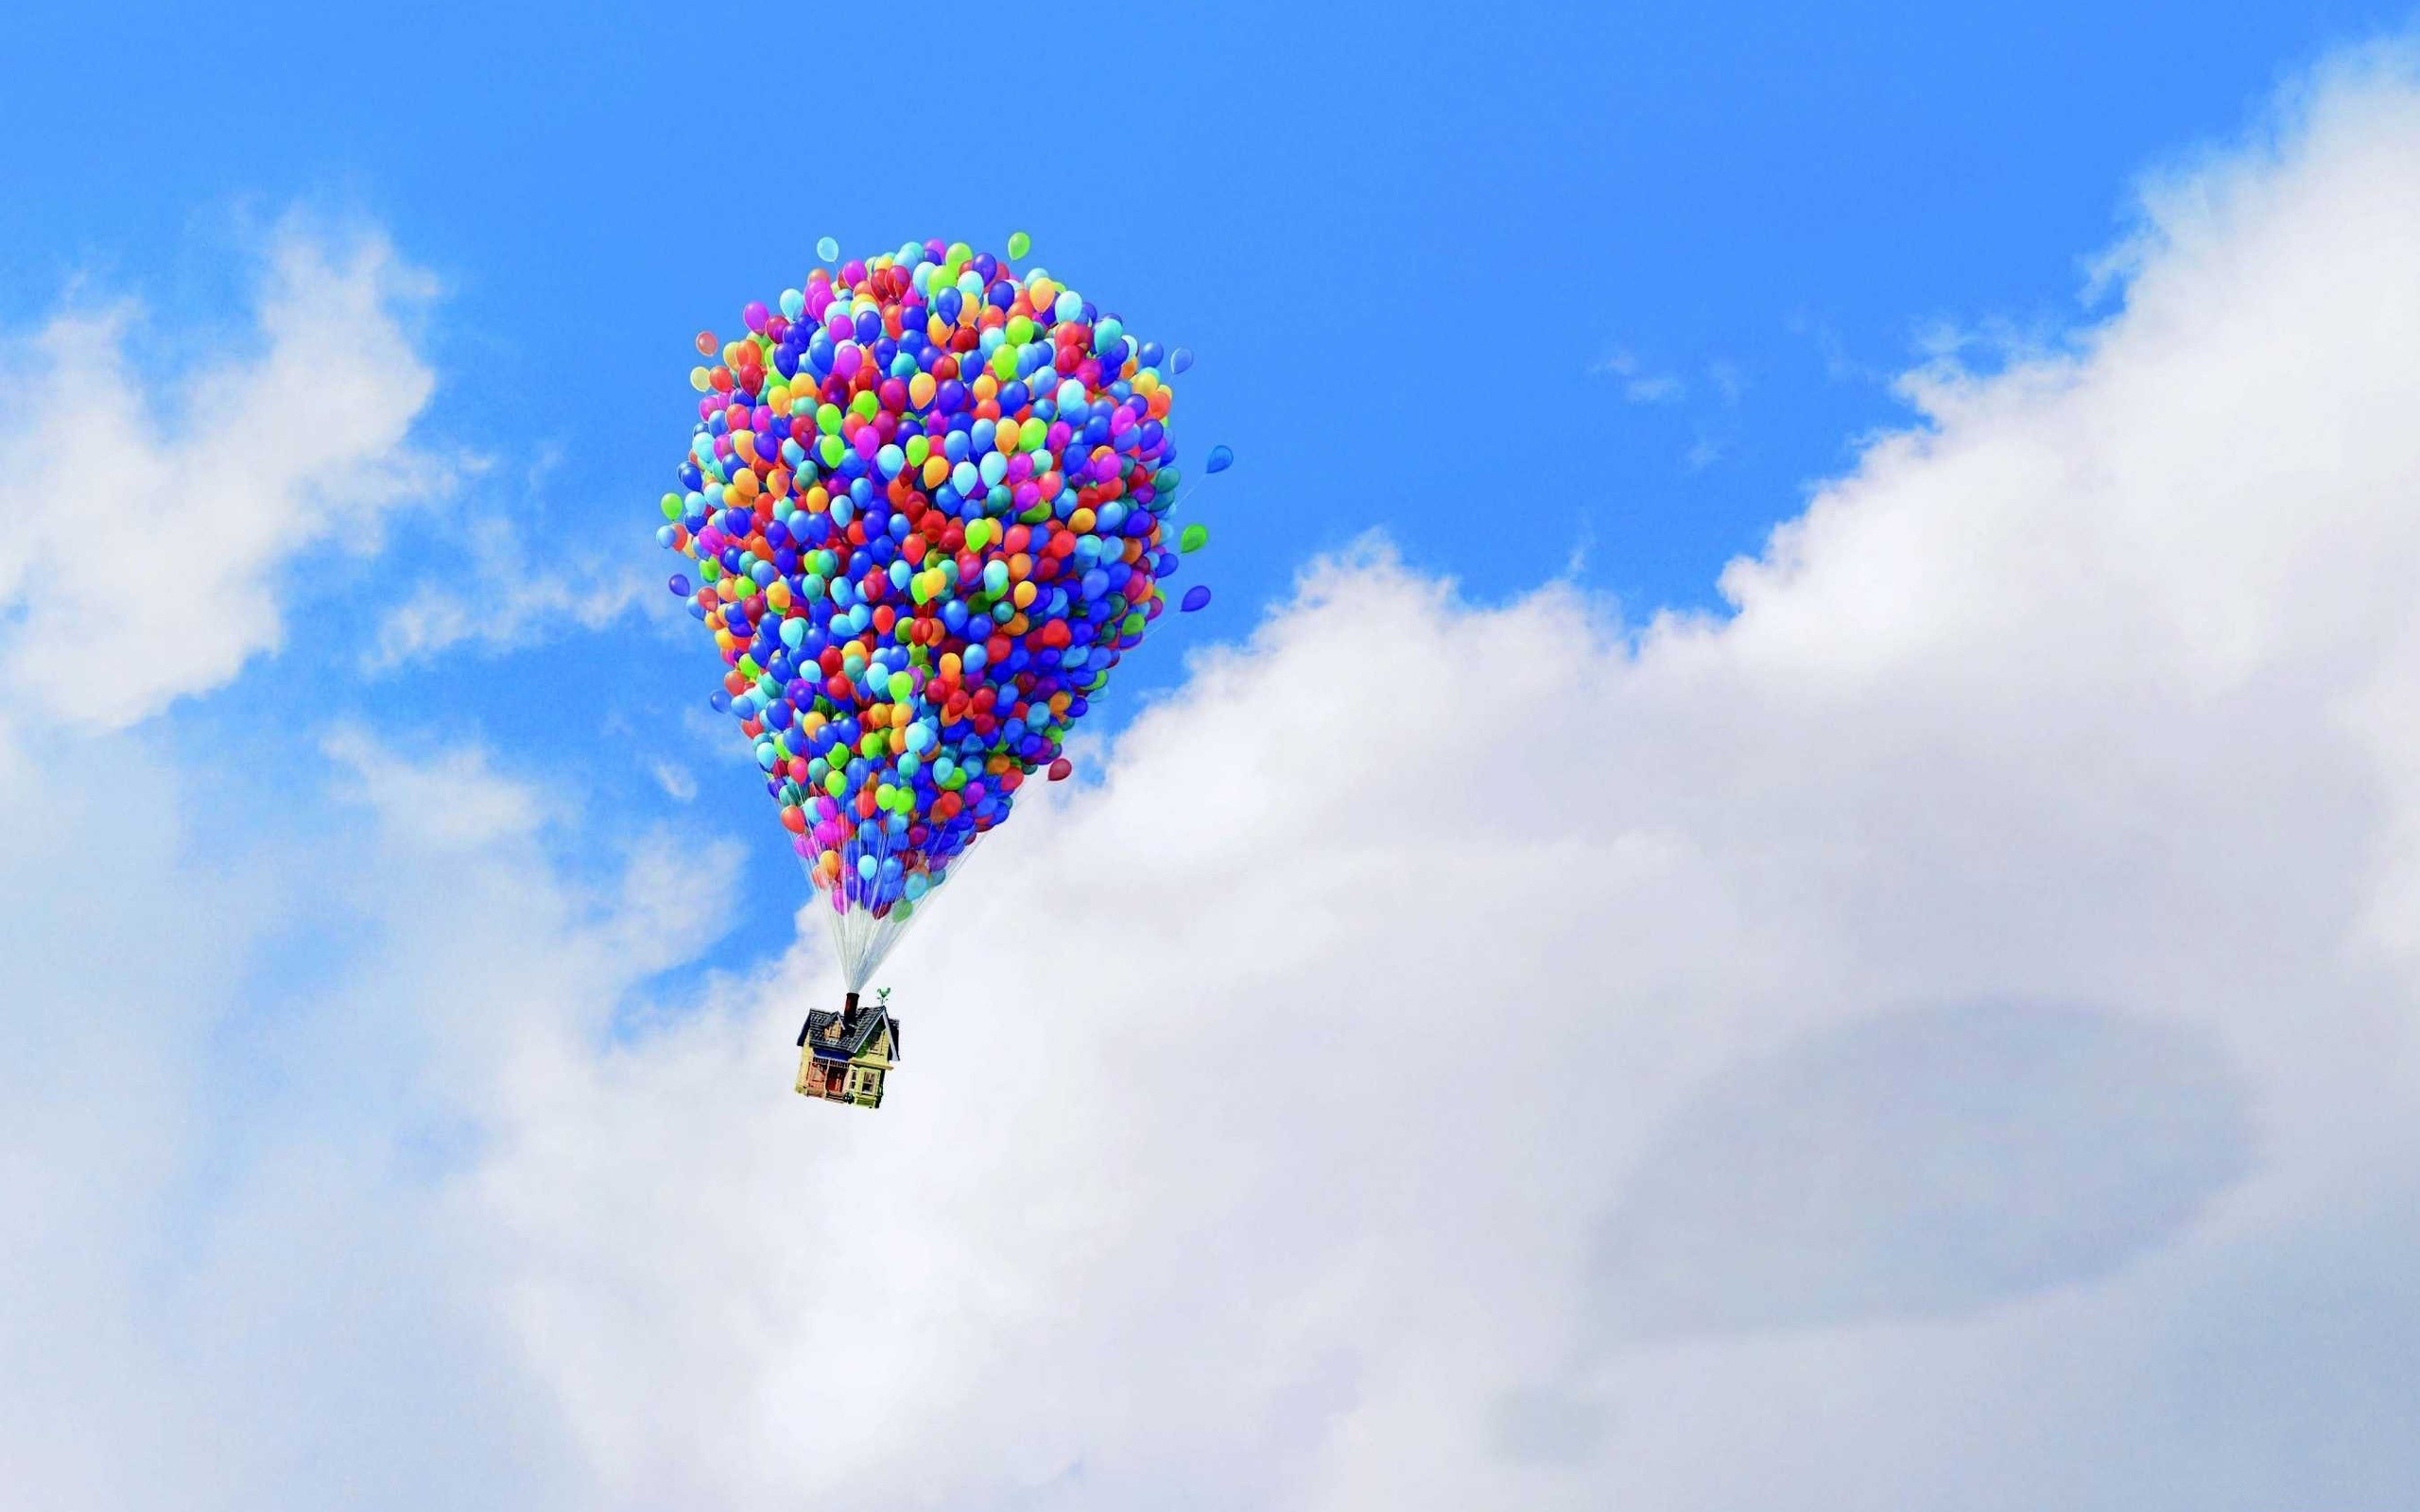 2560x1600 Up Wallpaper Up pixar Pixar animation balloons house sky 